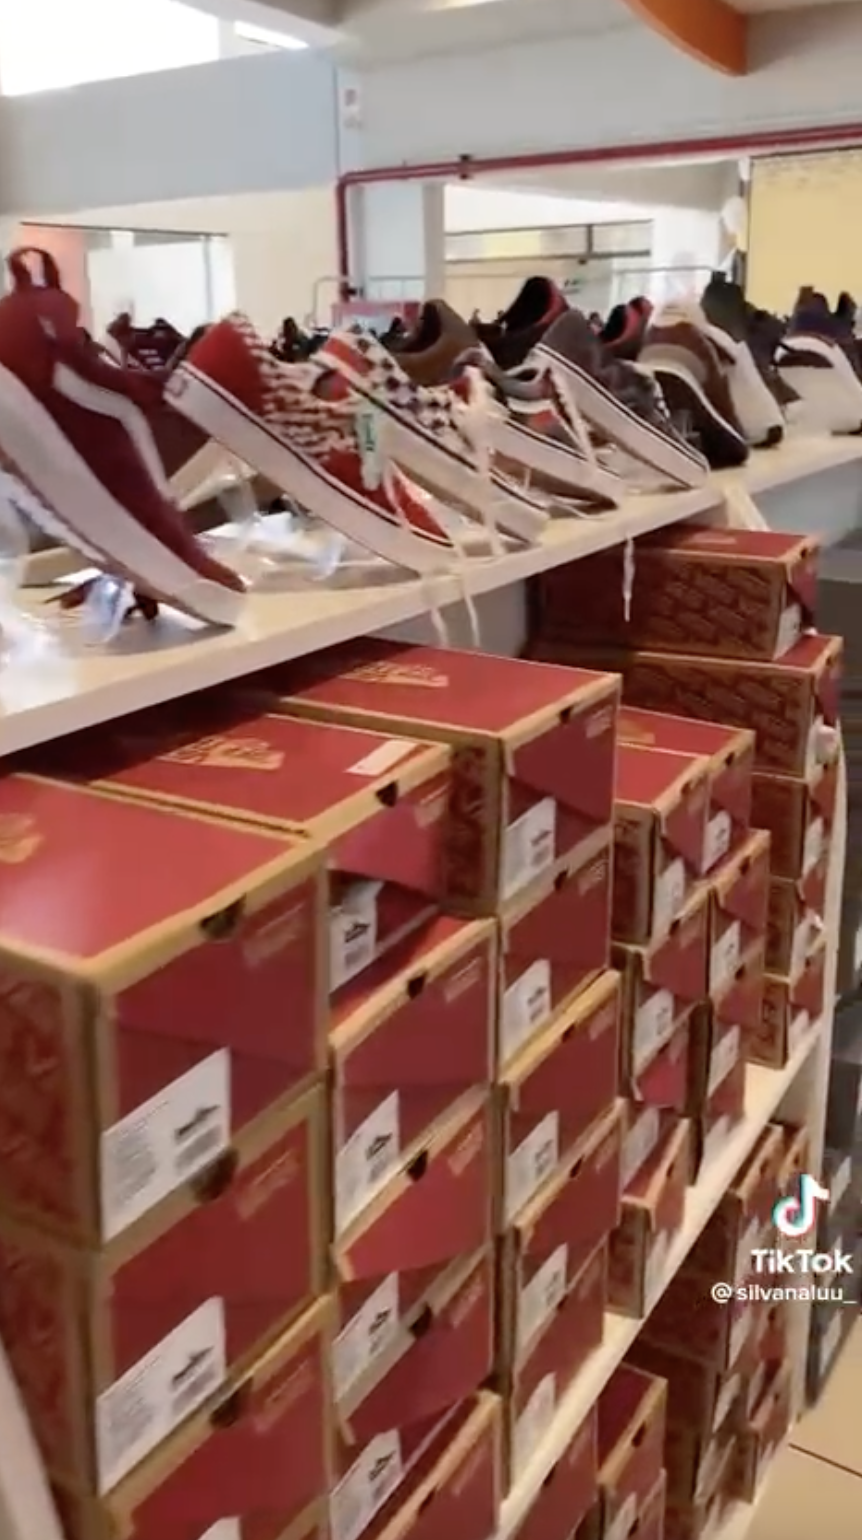 Almacén en Lima ofrece zapatillas